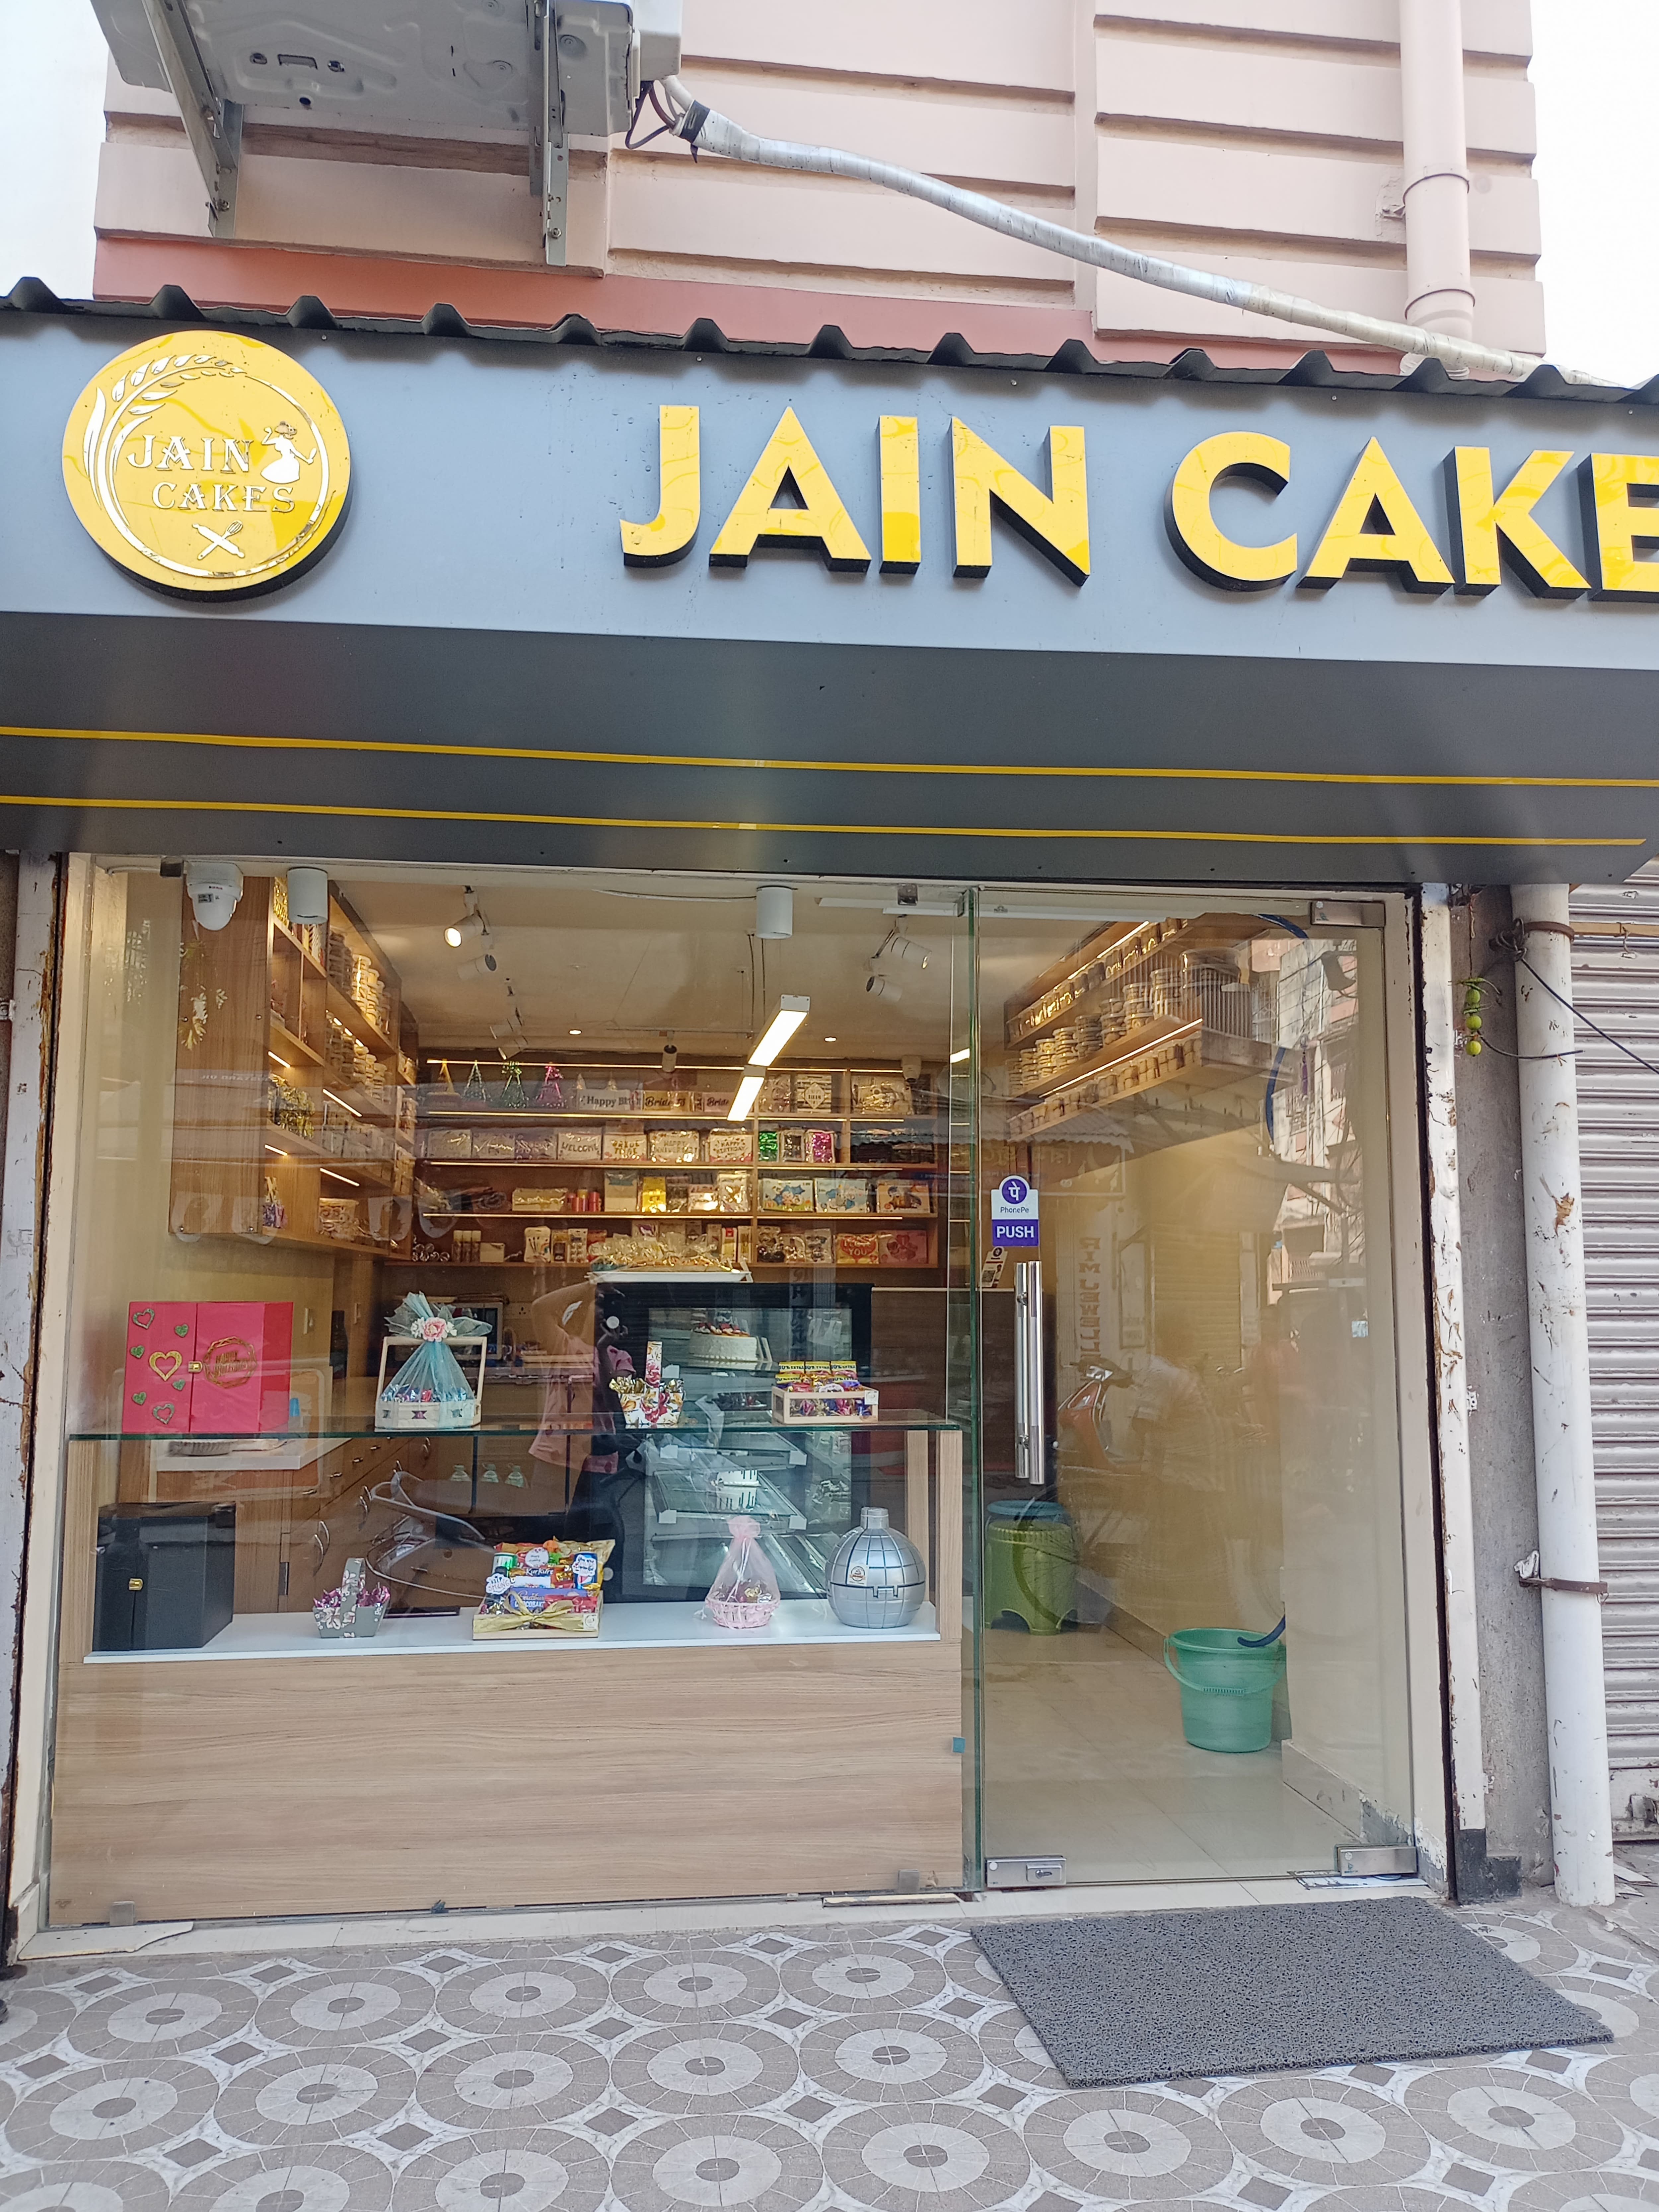 TASTY JAIN CAKE - 95454 53929, Pune - Restaurant reviews